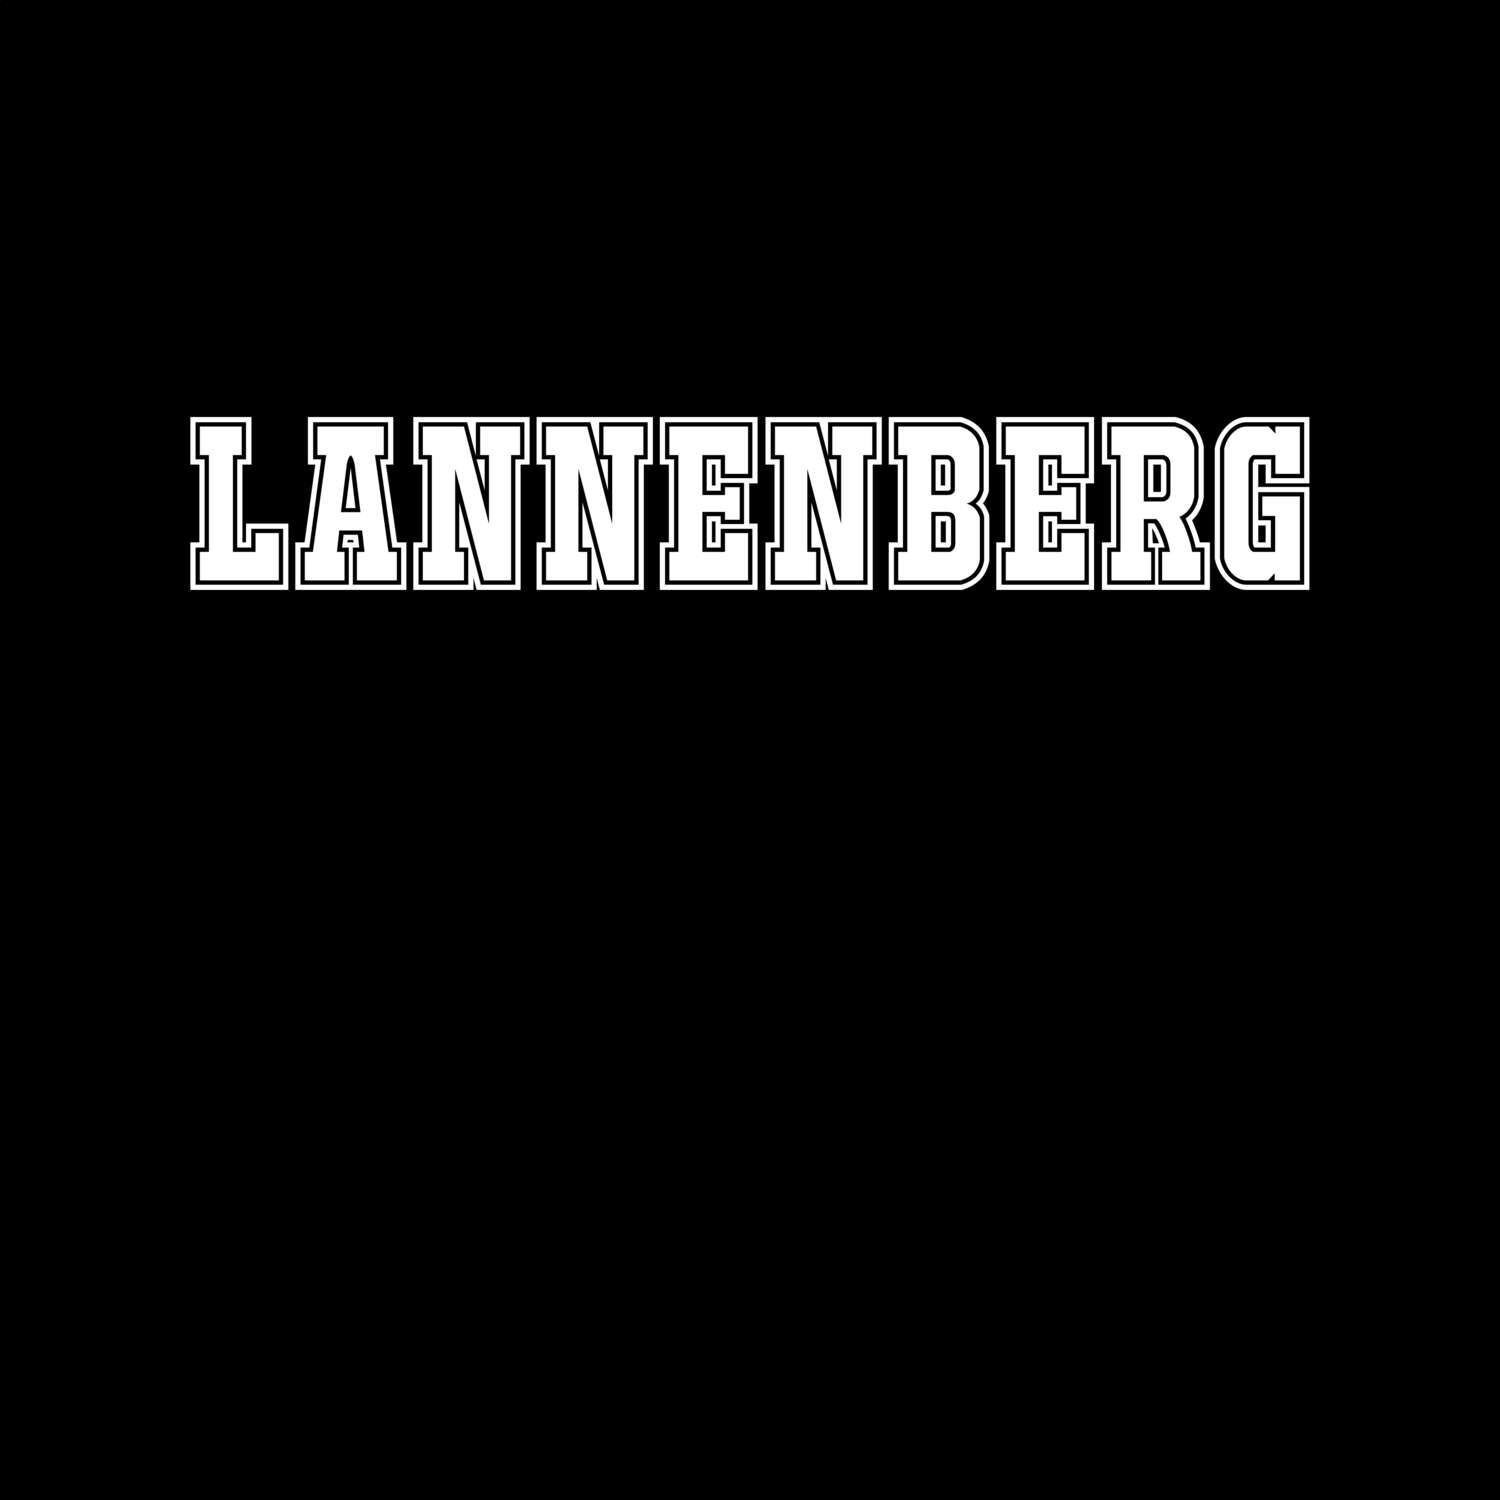 Lannenberg T-Shirt »Classic«